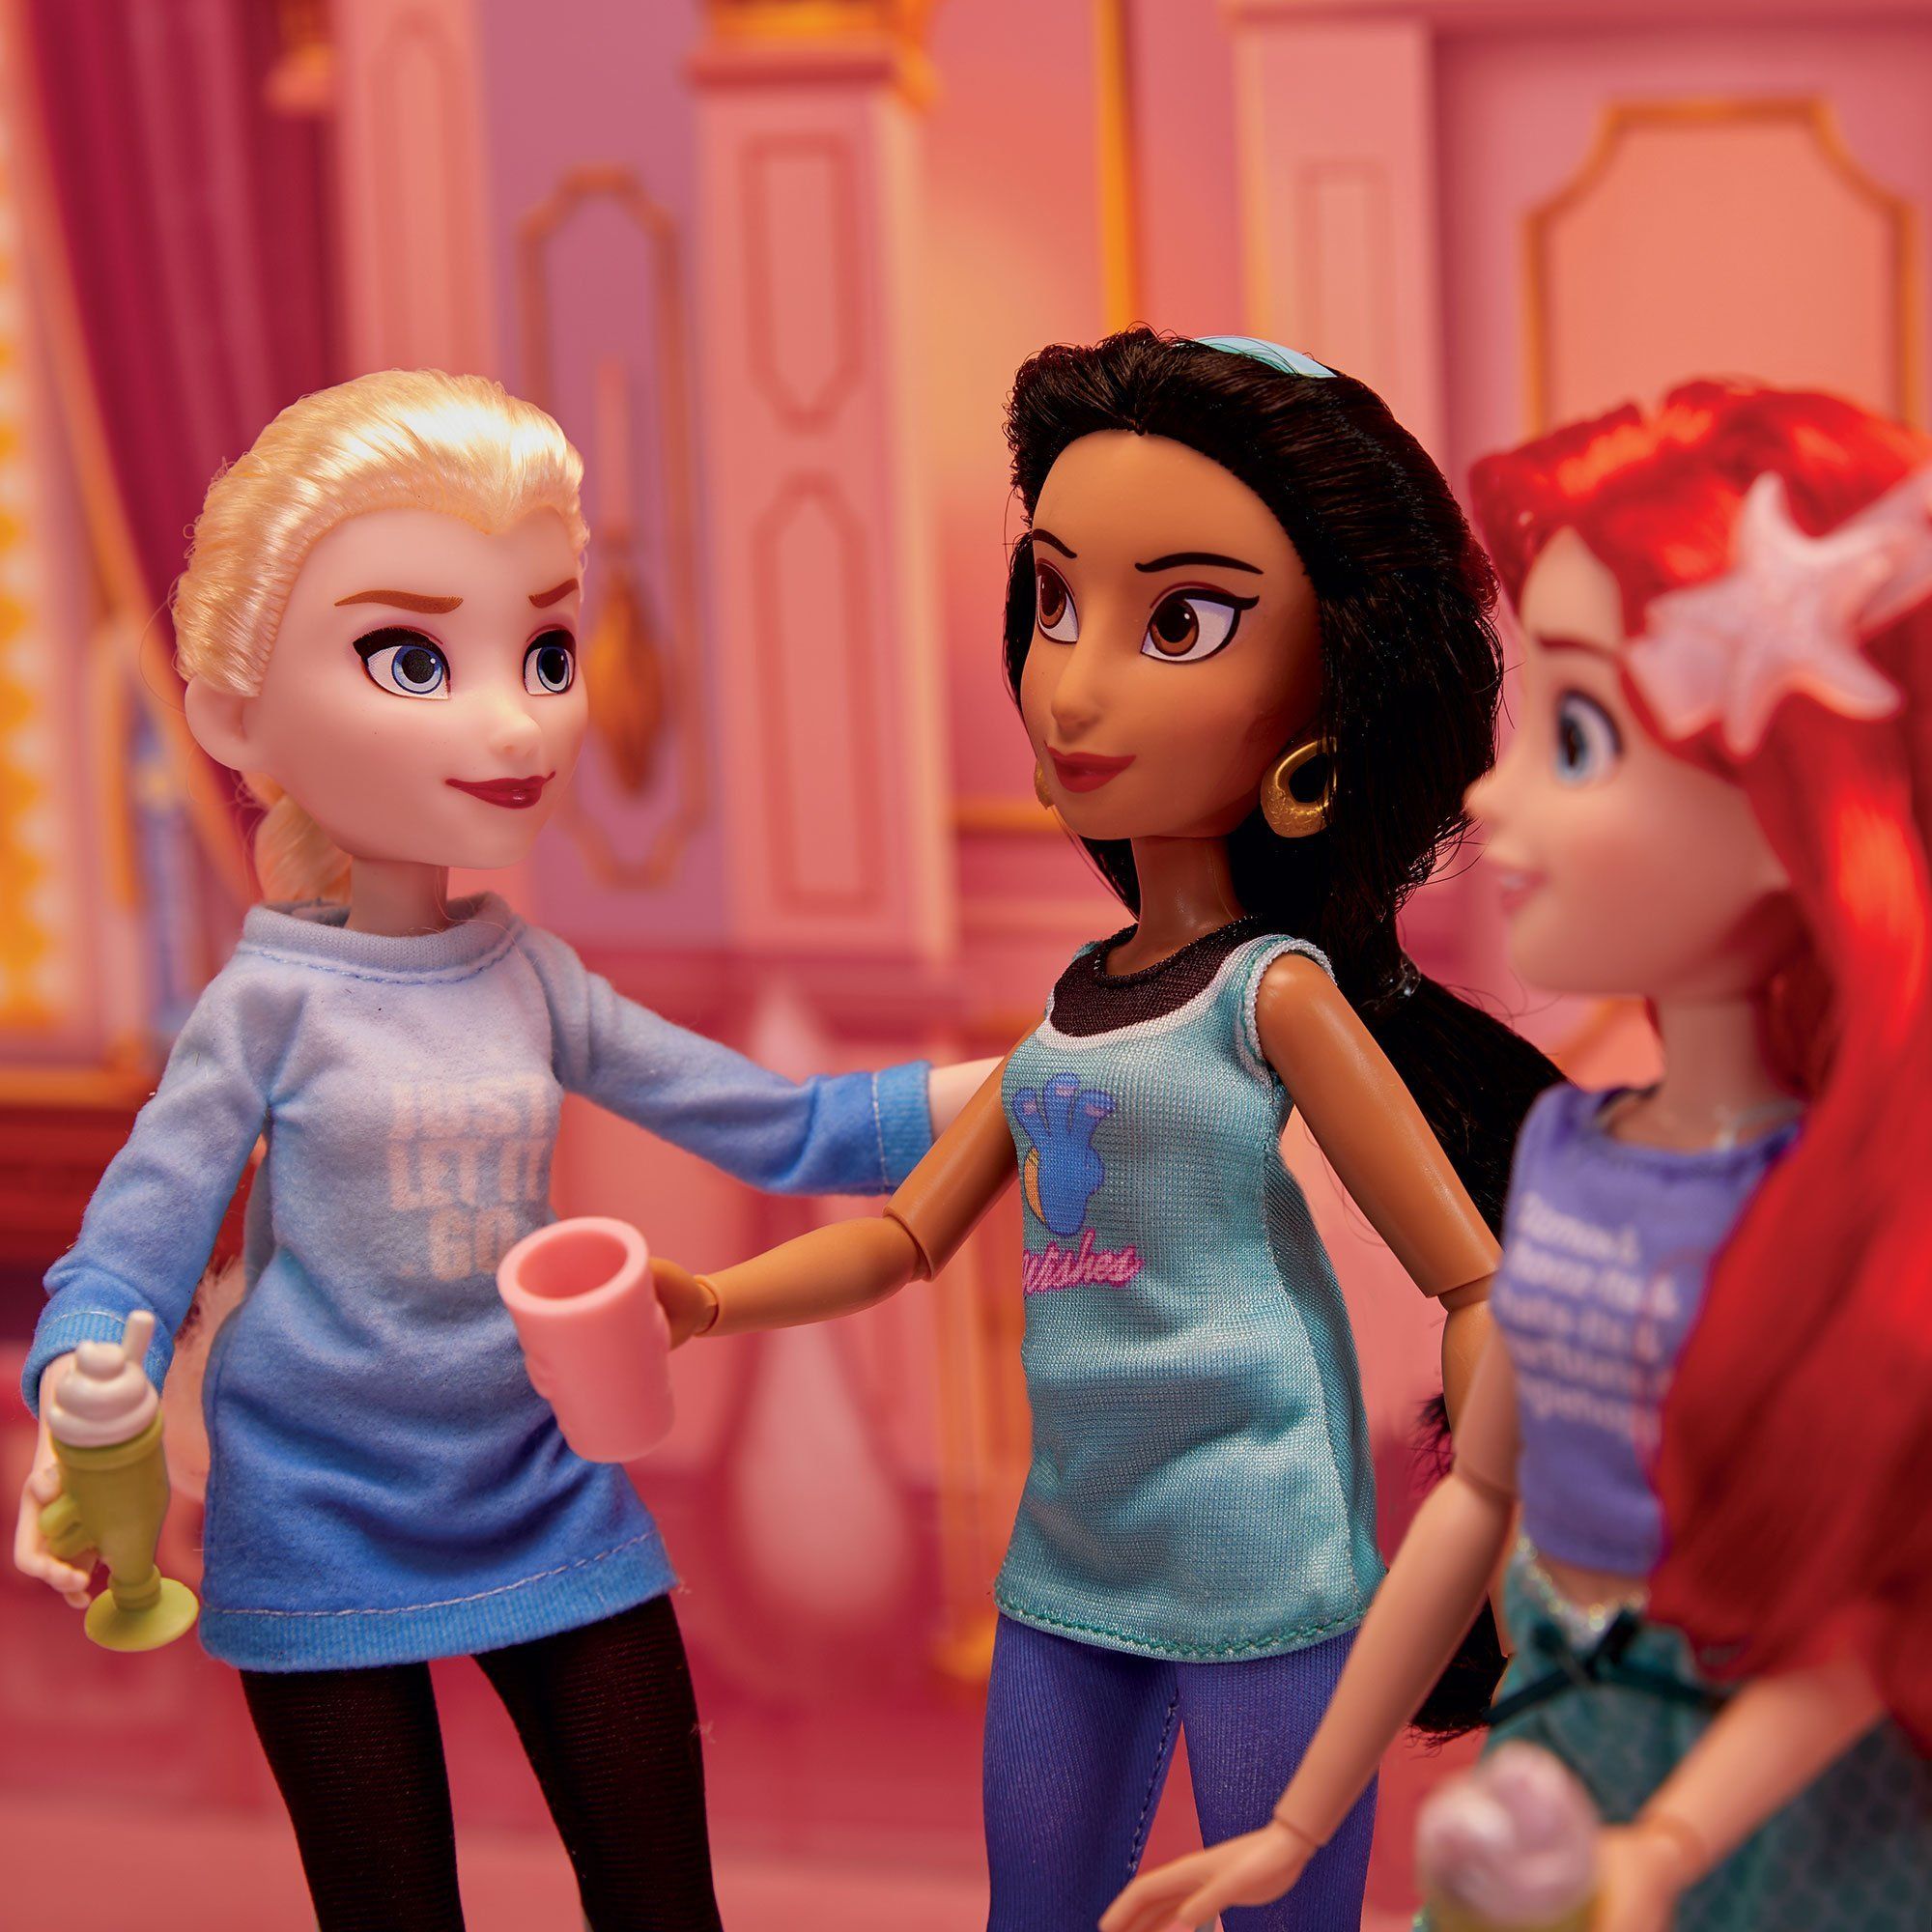 Hasbro Reveals Ralph Breaks the Internet Disney Princess Dolls